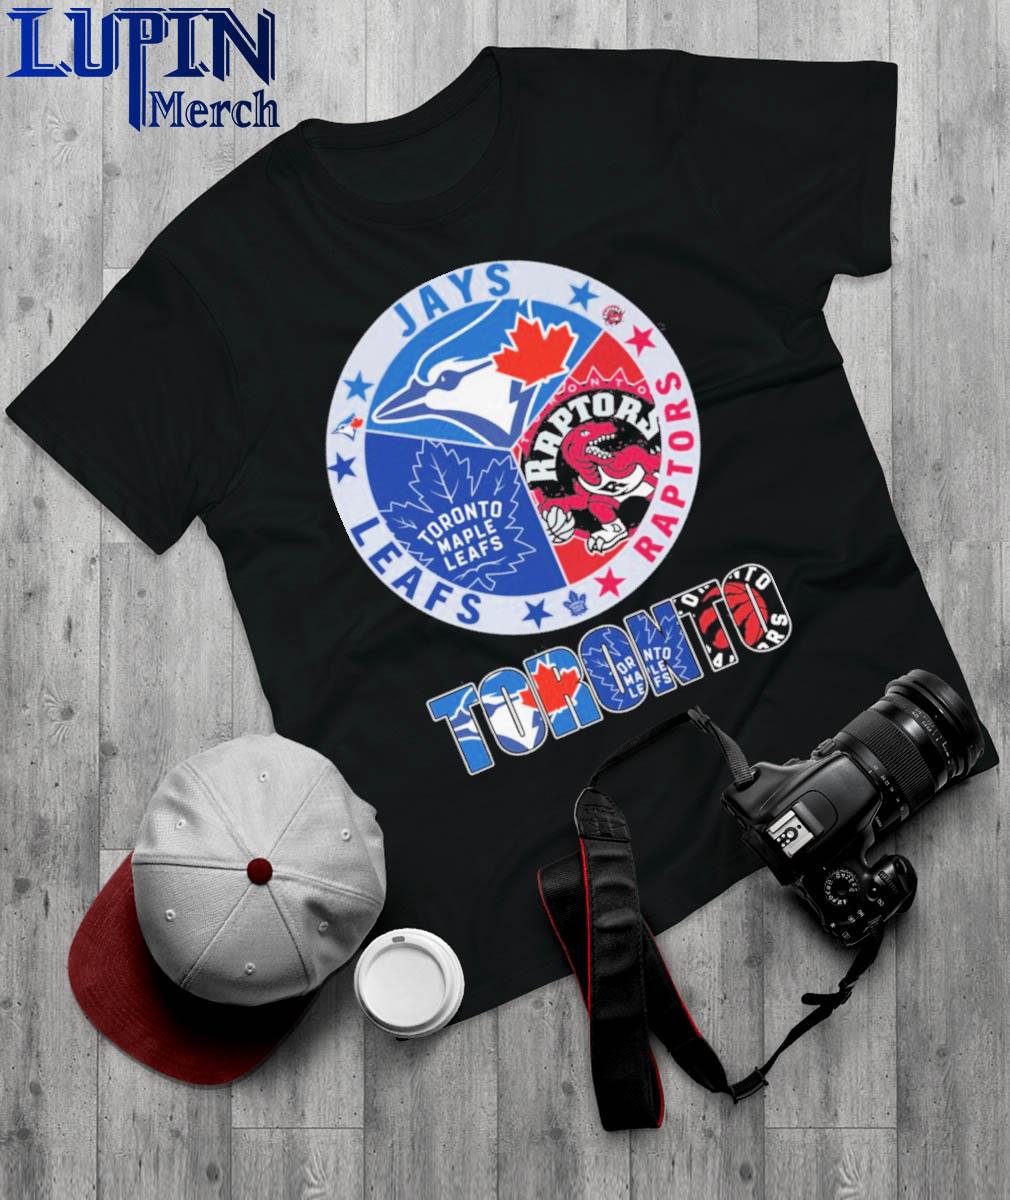 Toronto Maple Leafs Toronto Blue Jays Toronto Raptors T Shirt